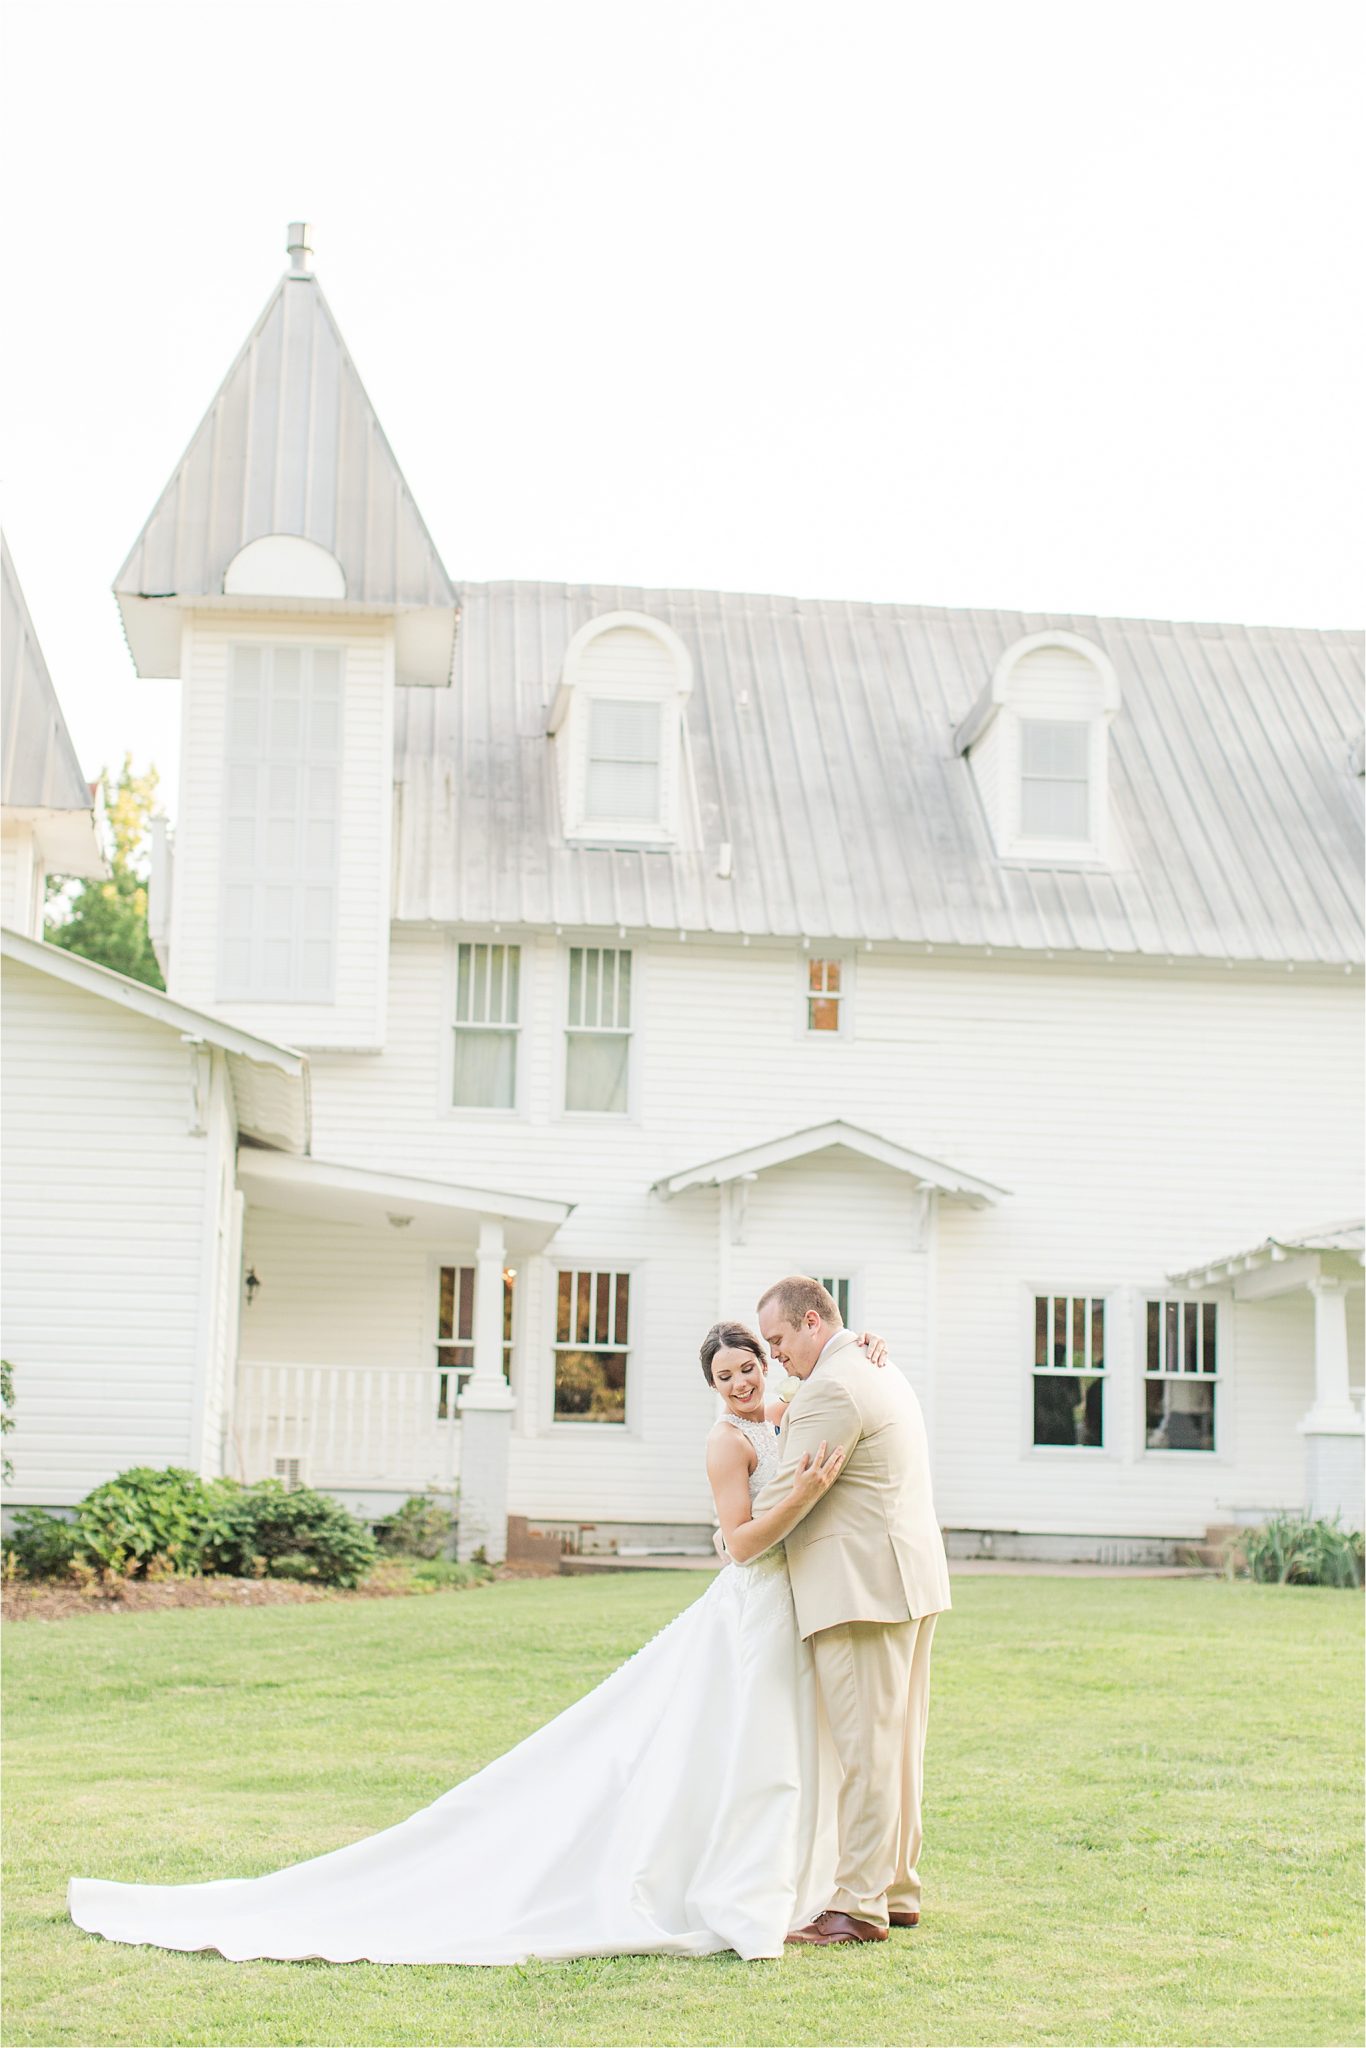 Sonnet House, Birmingham Alabama Wedding Photographer, Courtney + Ben